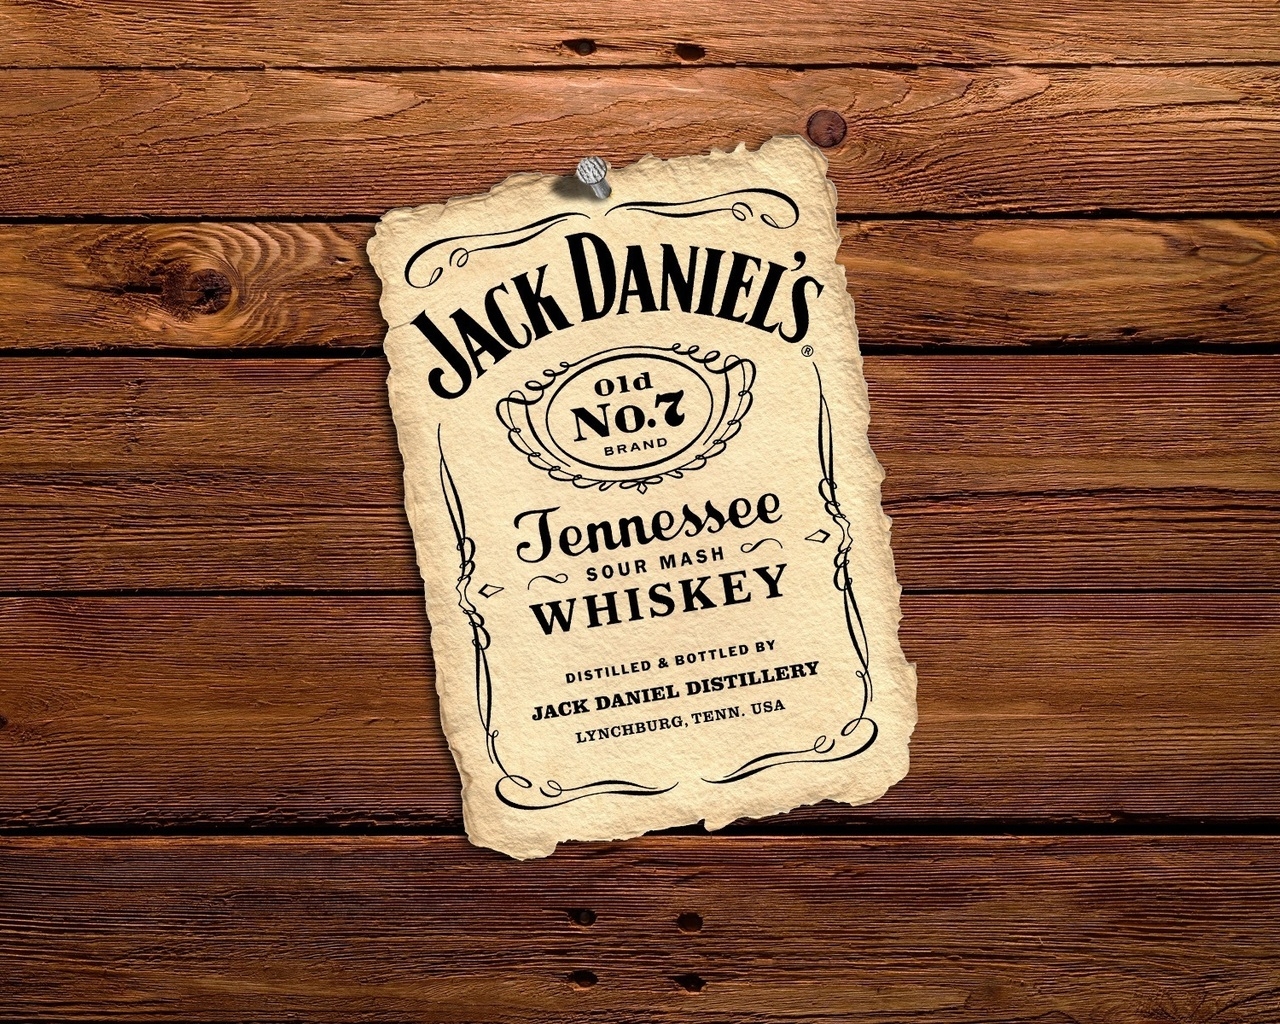 Jack Daniels Flyer for 1280 x 1024 resolution